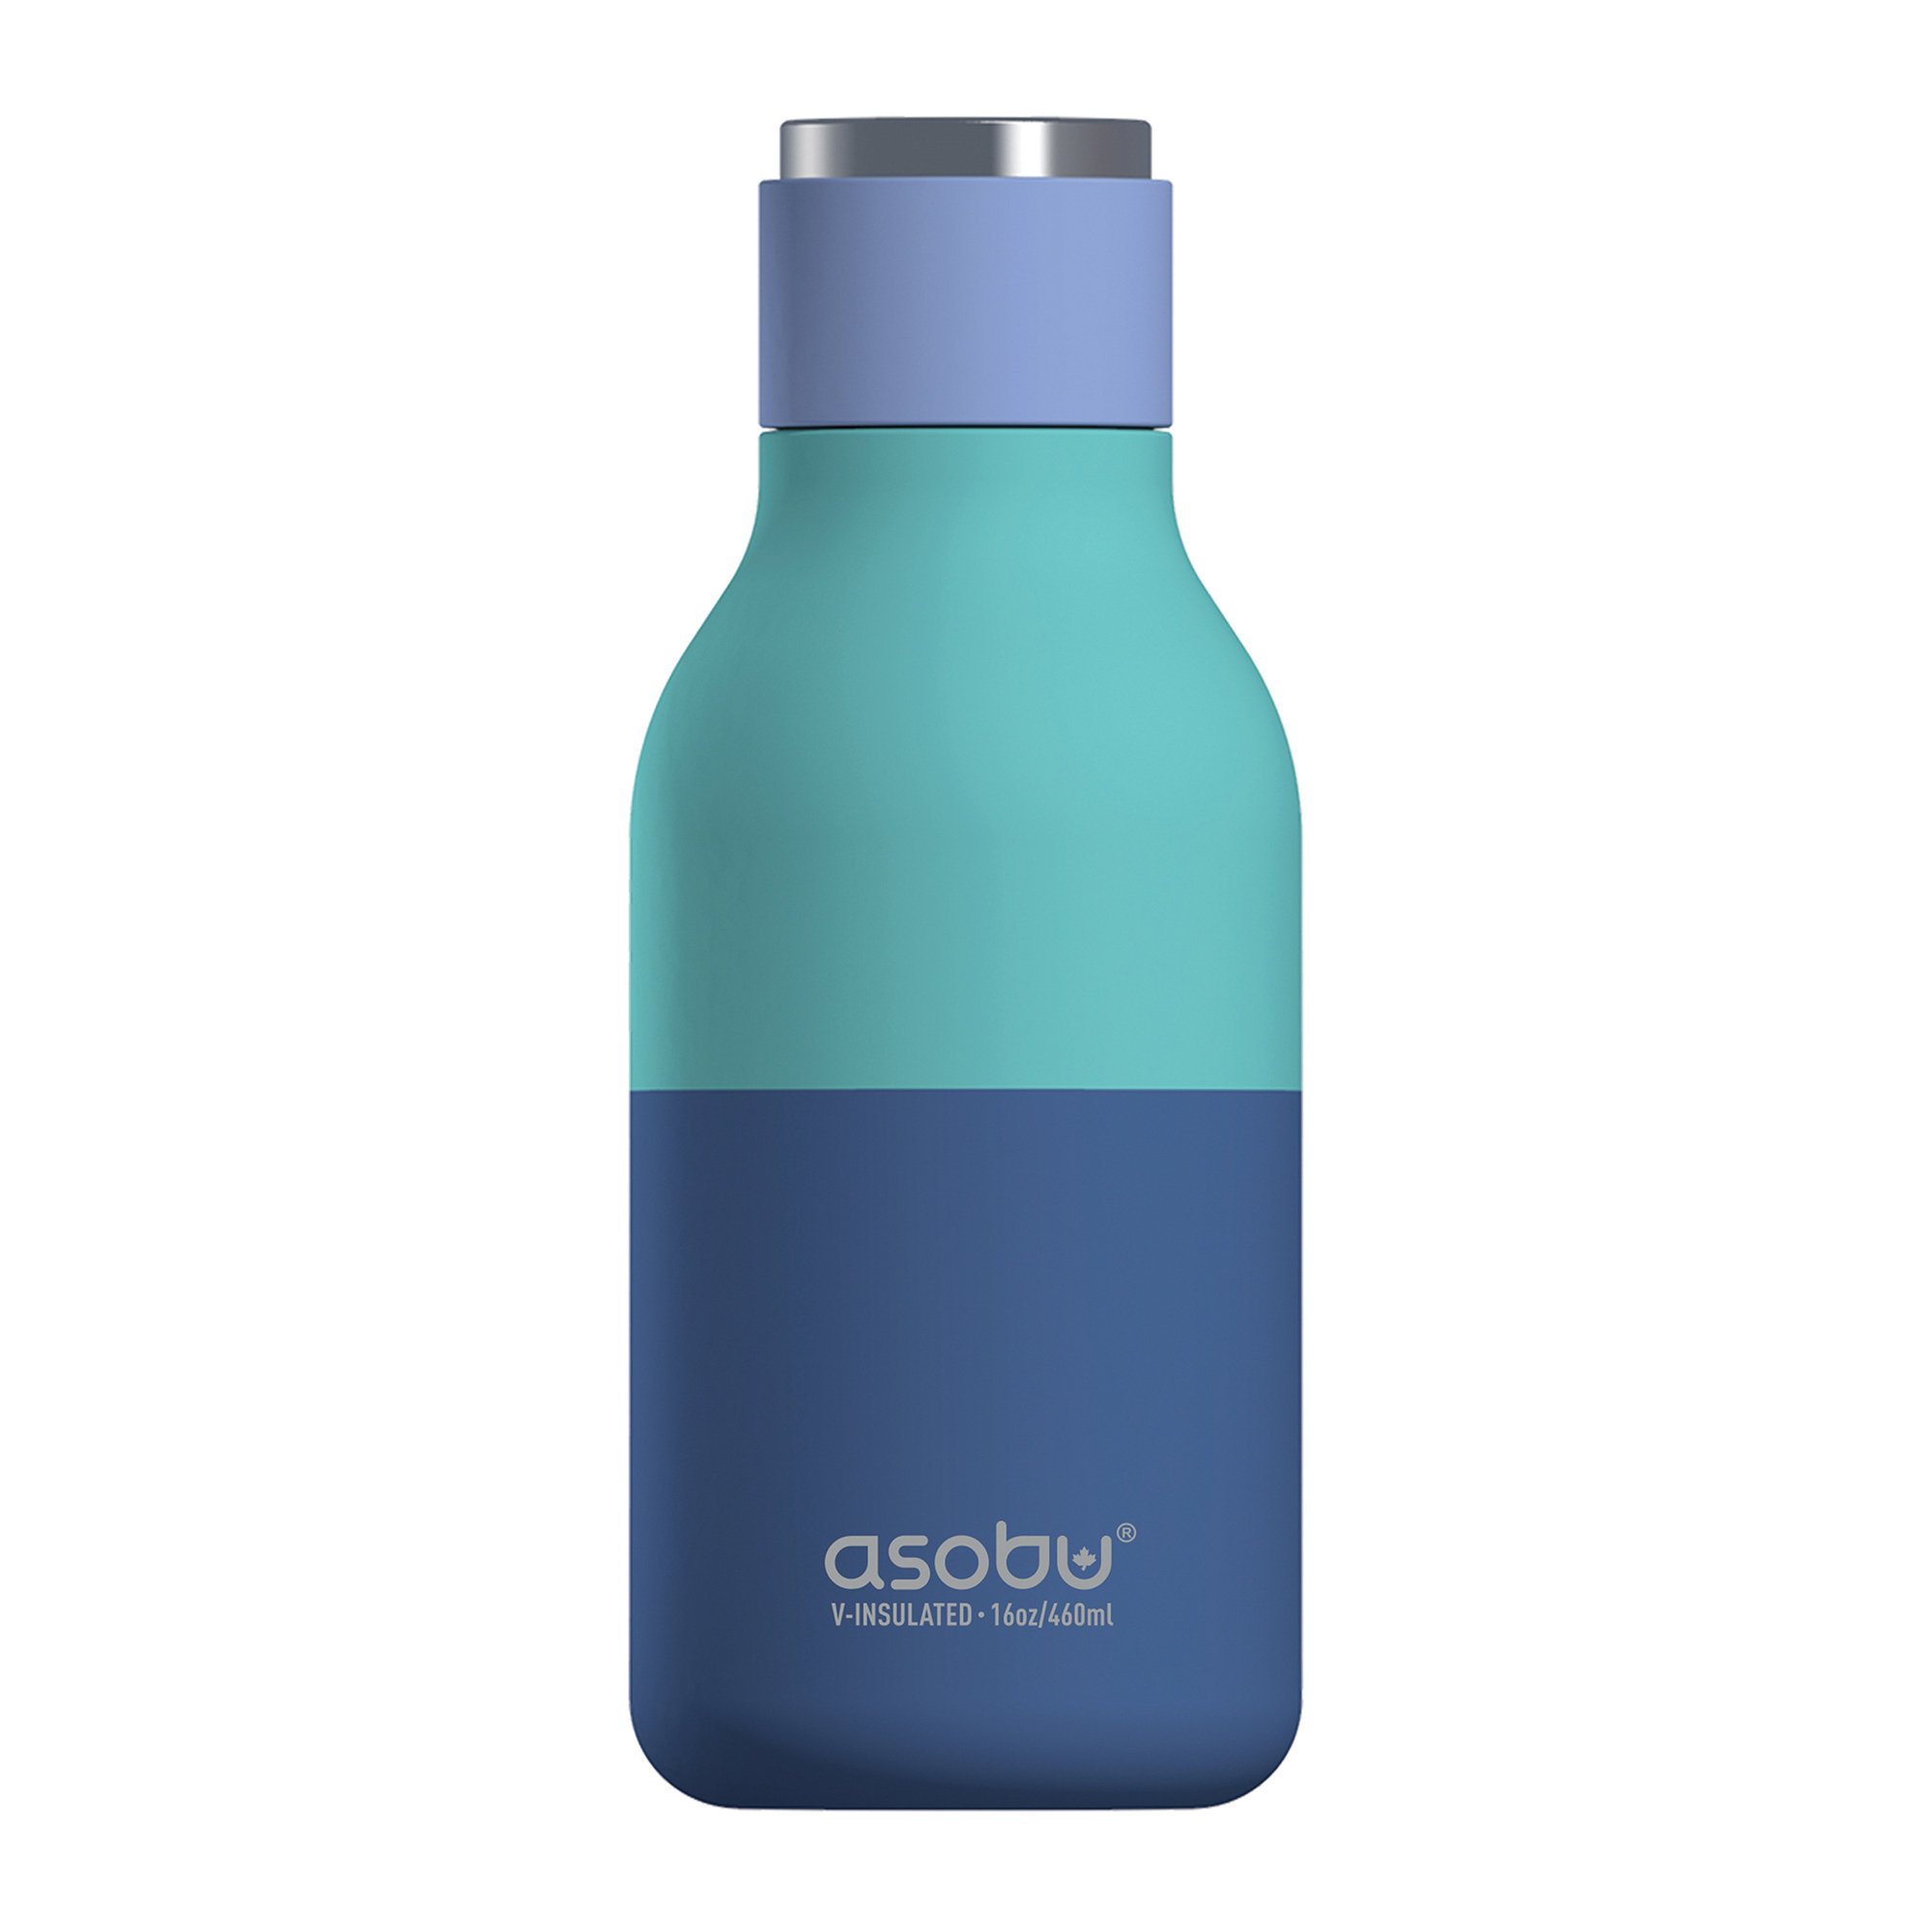 16 oz. asobu urban vacuum insulated water bottle